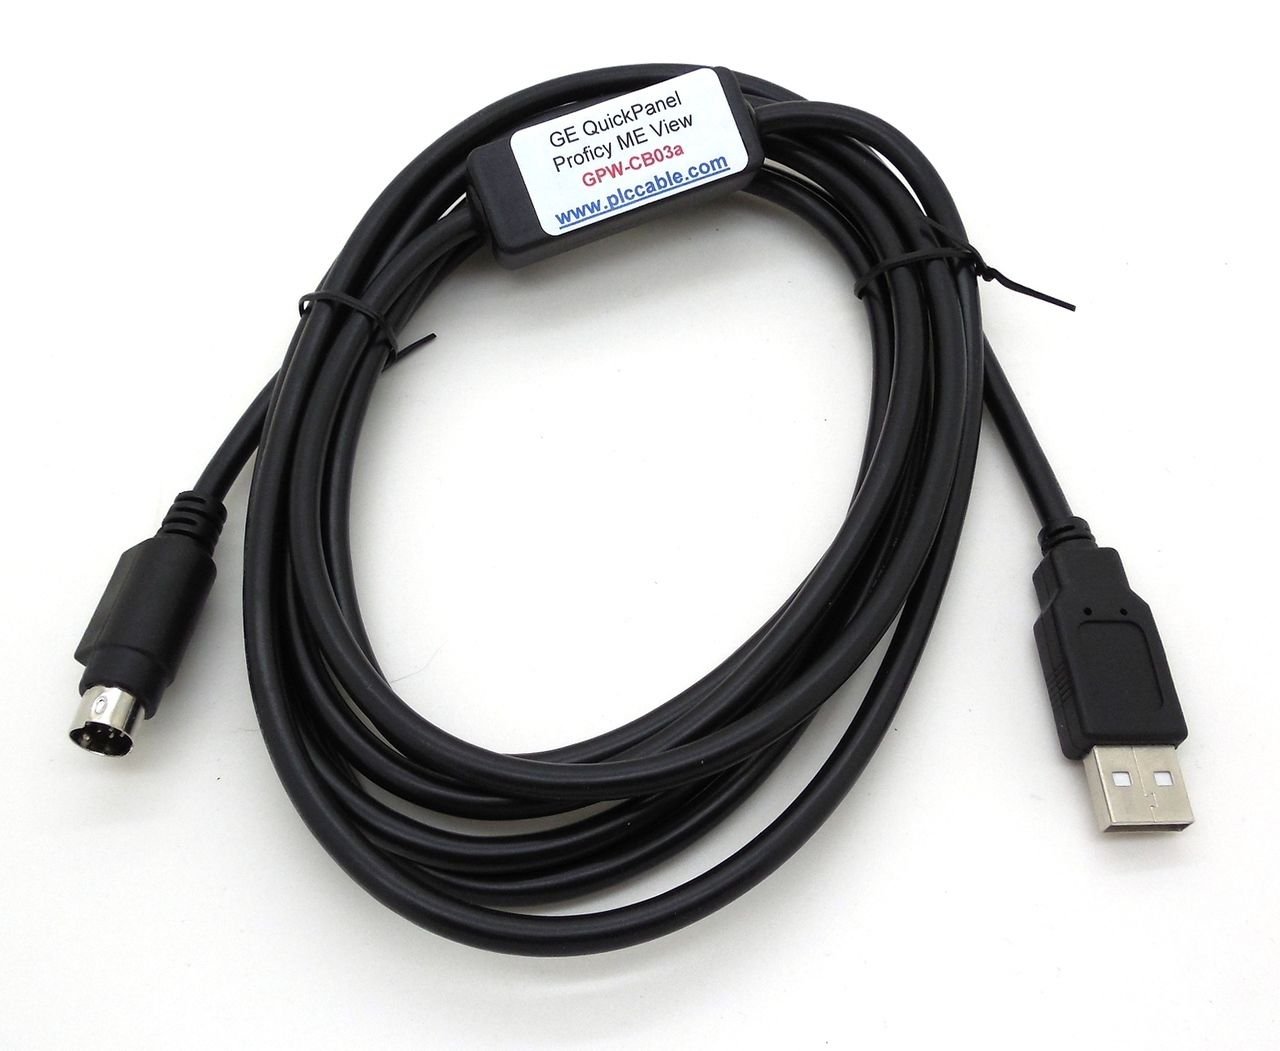 Digital GP / Proface USB-GPW-CB02 GPWCB02 HMI Cable USB-GPWCB03 USB